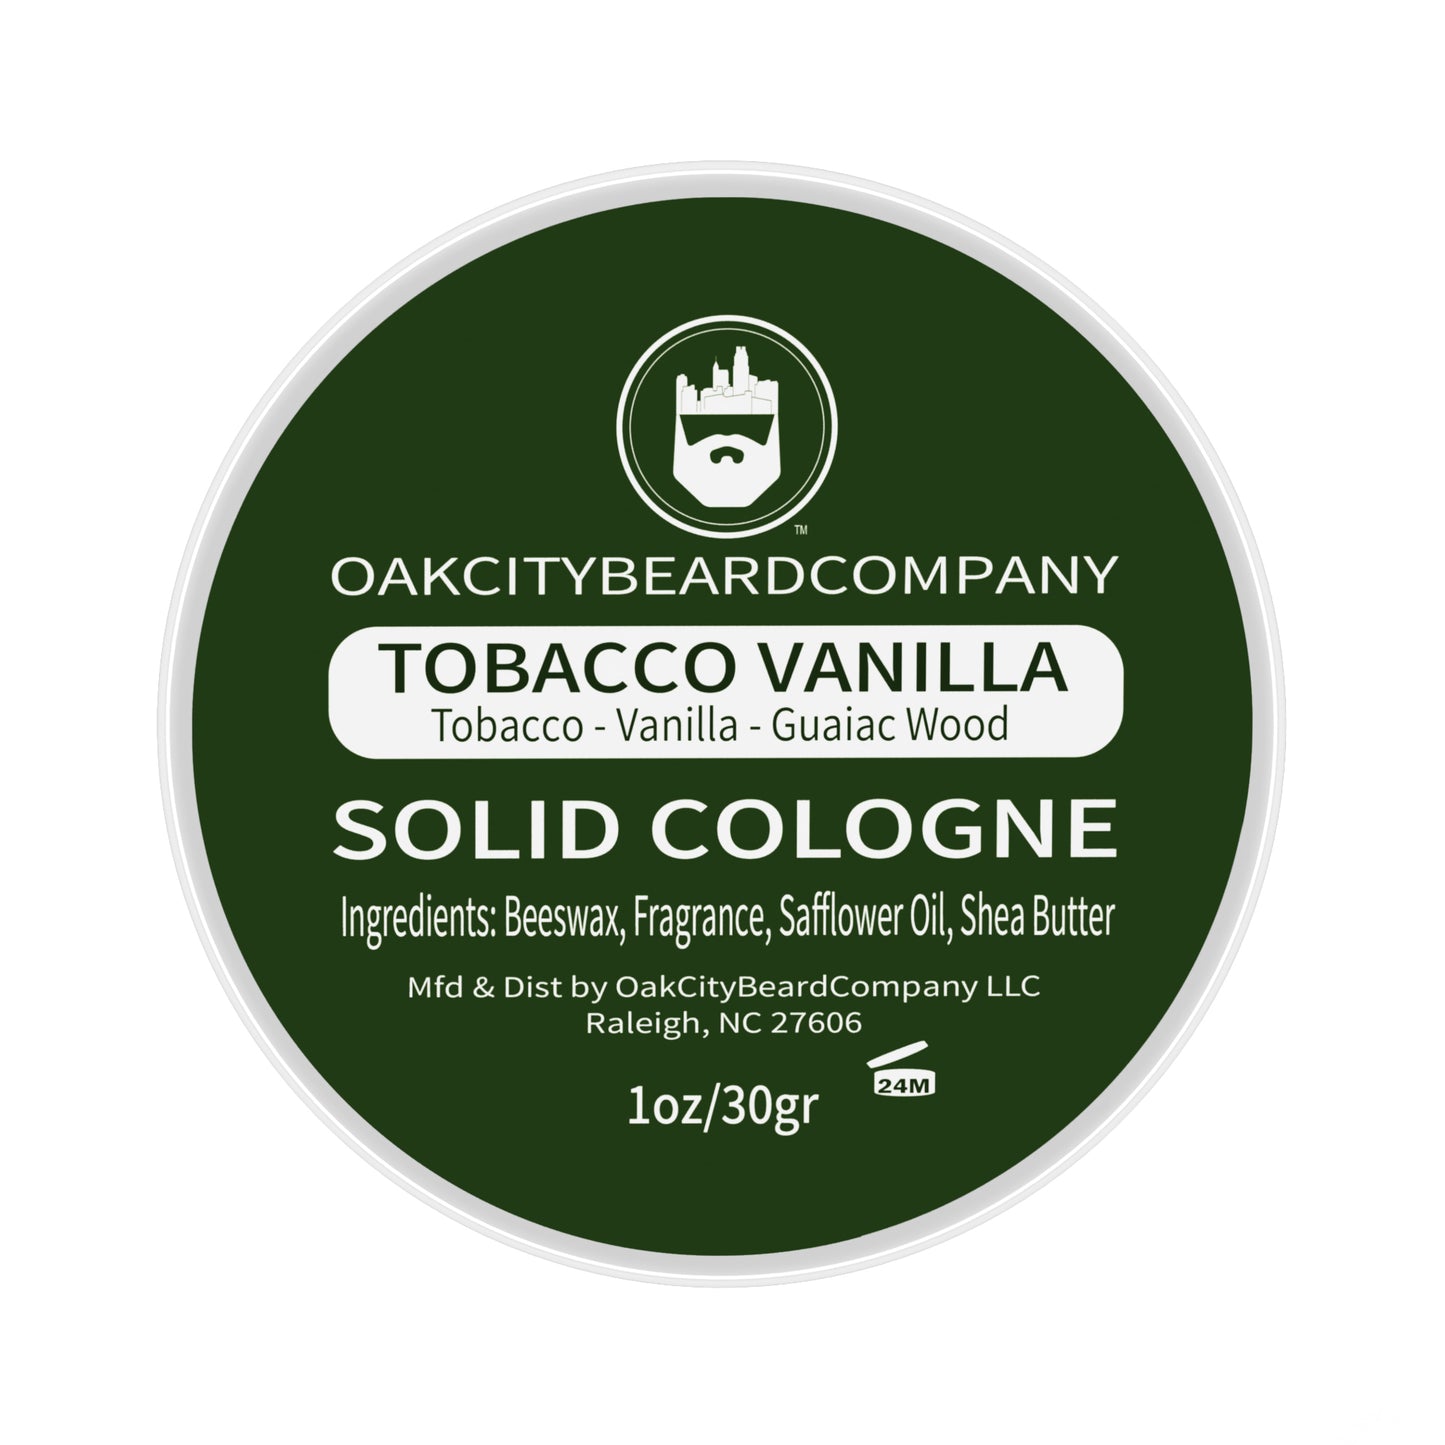 Tobacco Vanilla (Solid Cologne) by Oak City Beard Company